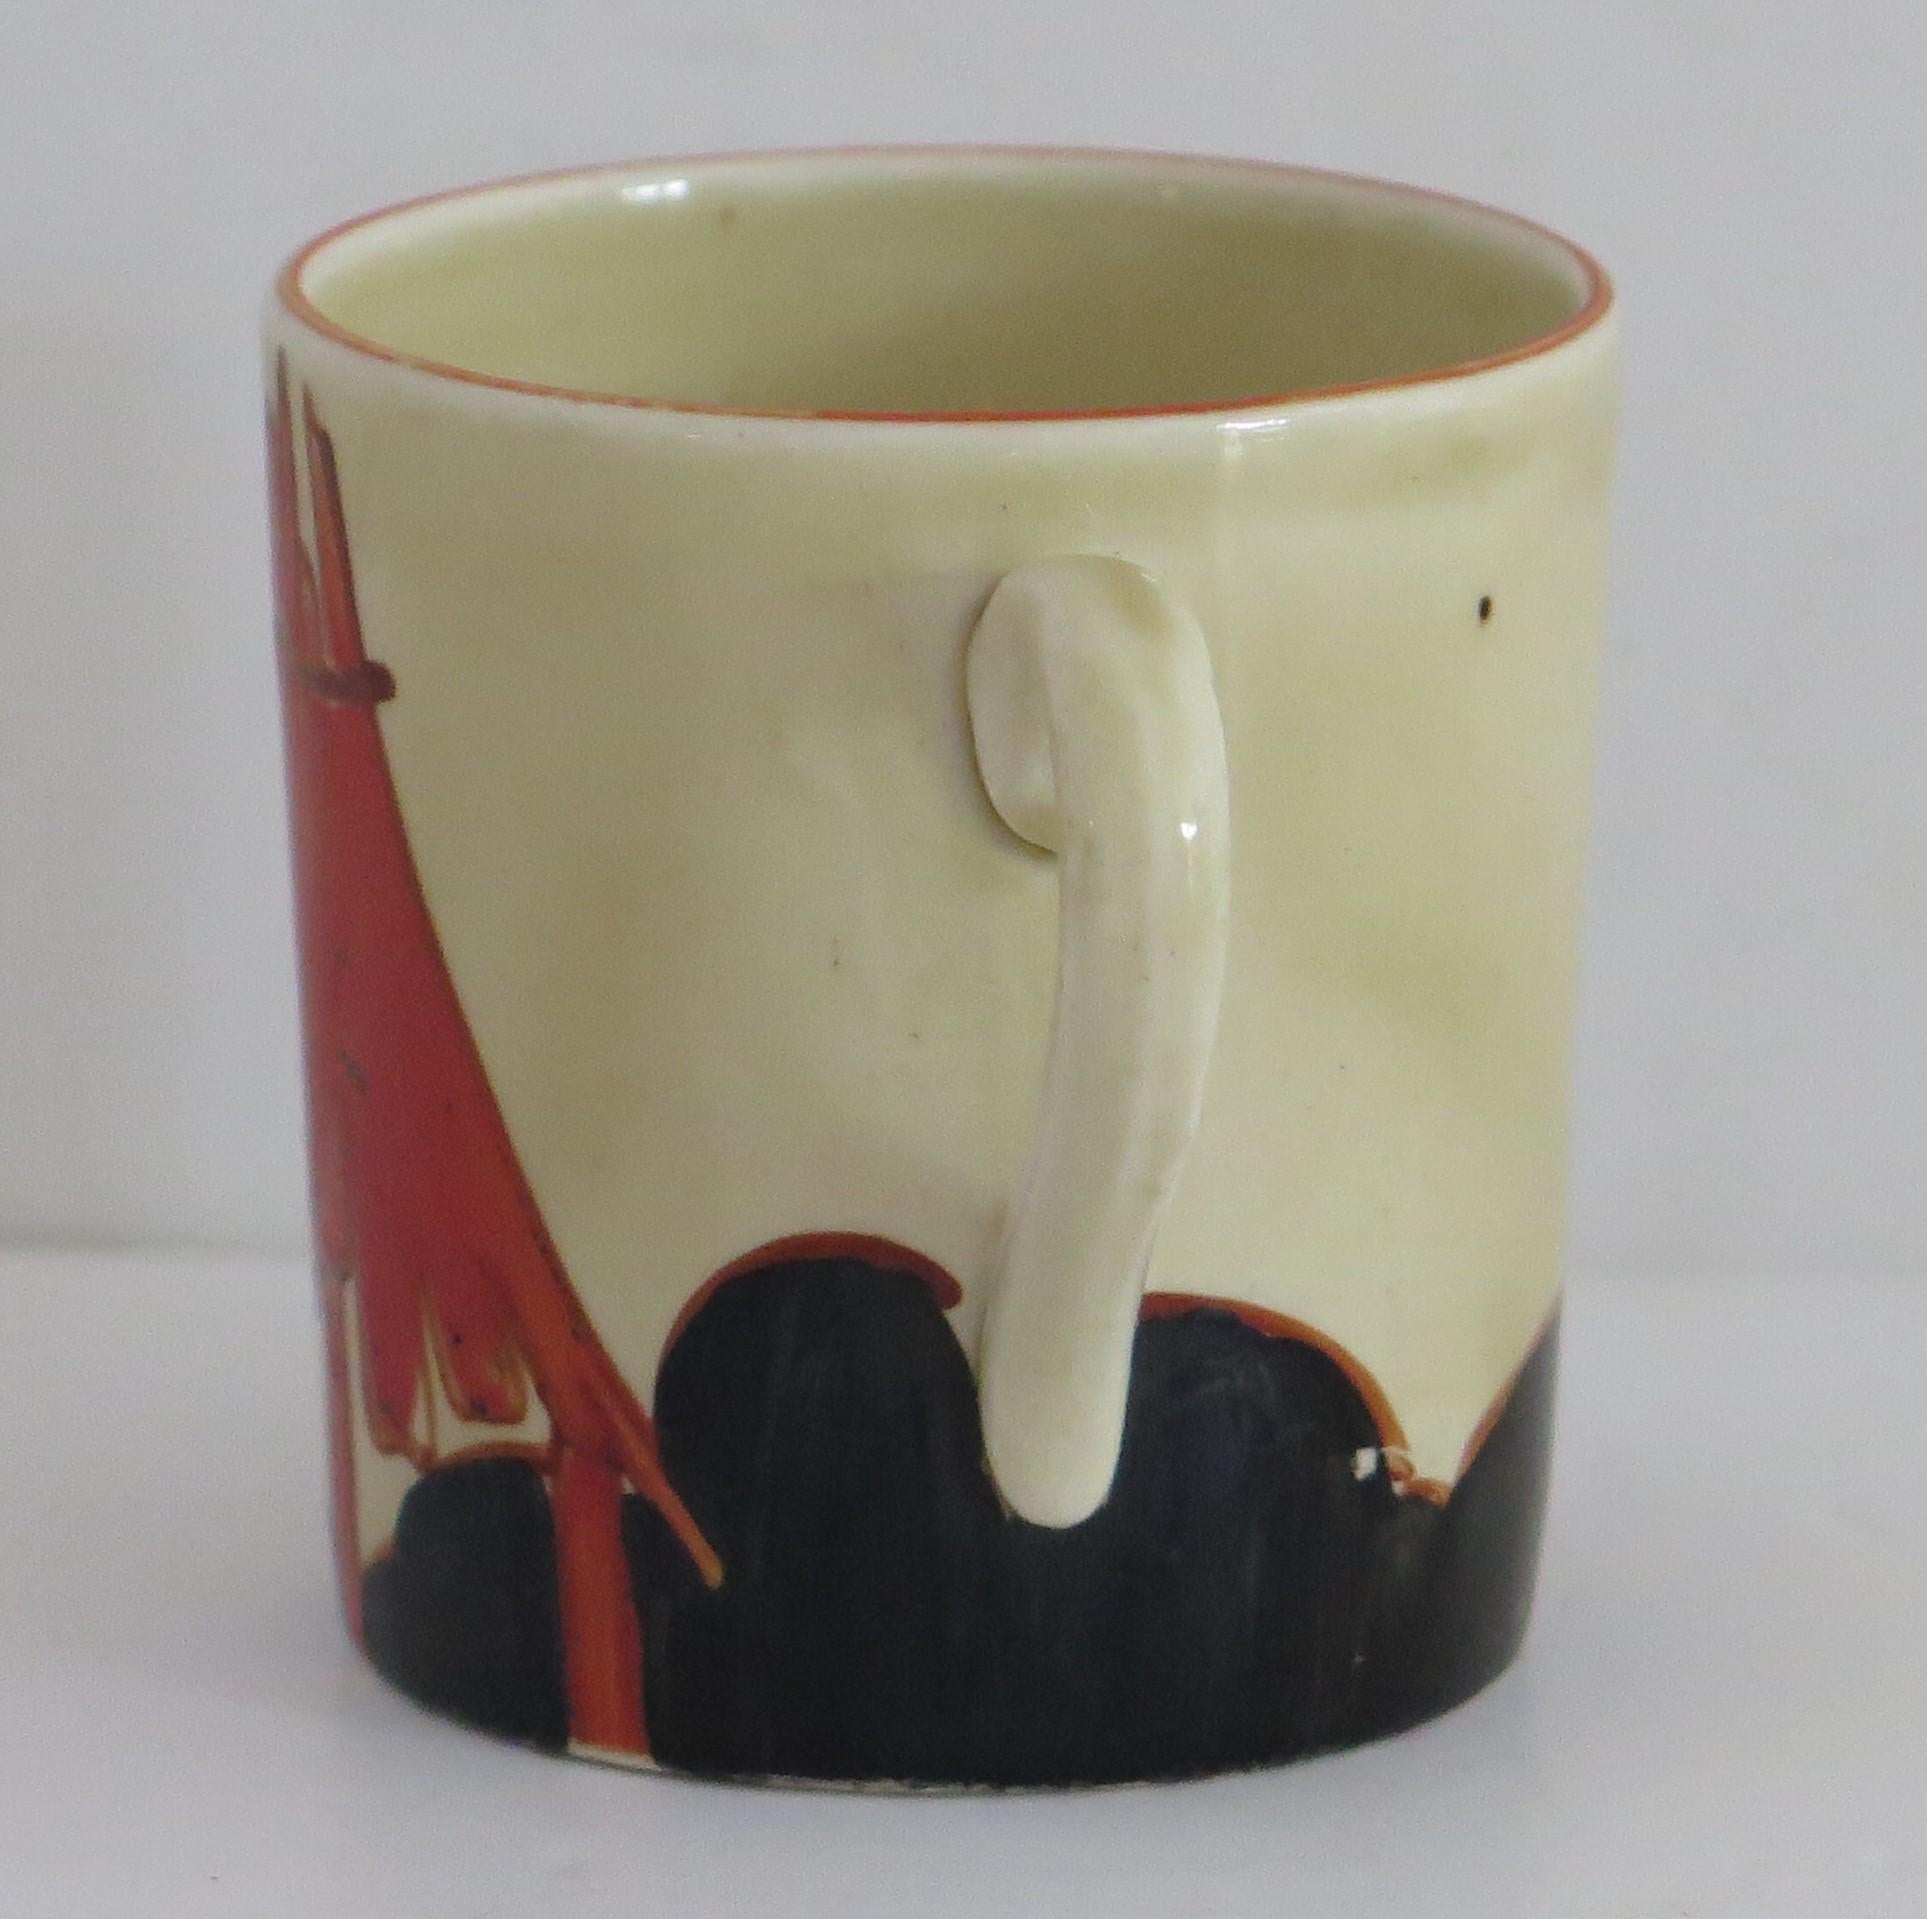 Pottery Clarice Cliff Cup and Saucer Rare Red Autumn Bizarre & Fantasque Ptn, circa 1930